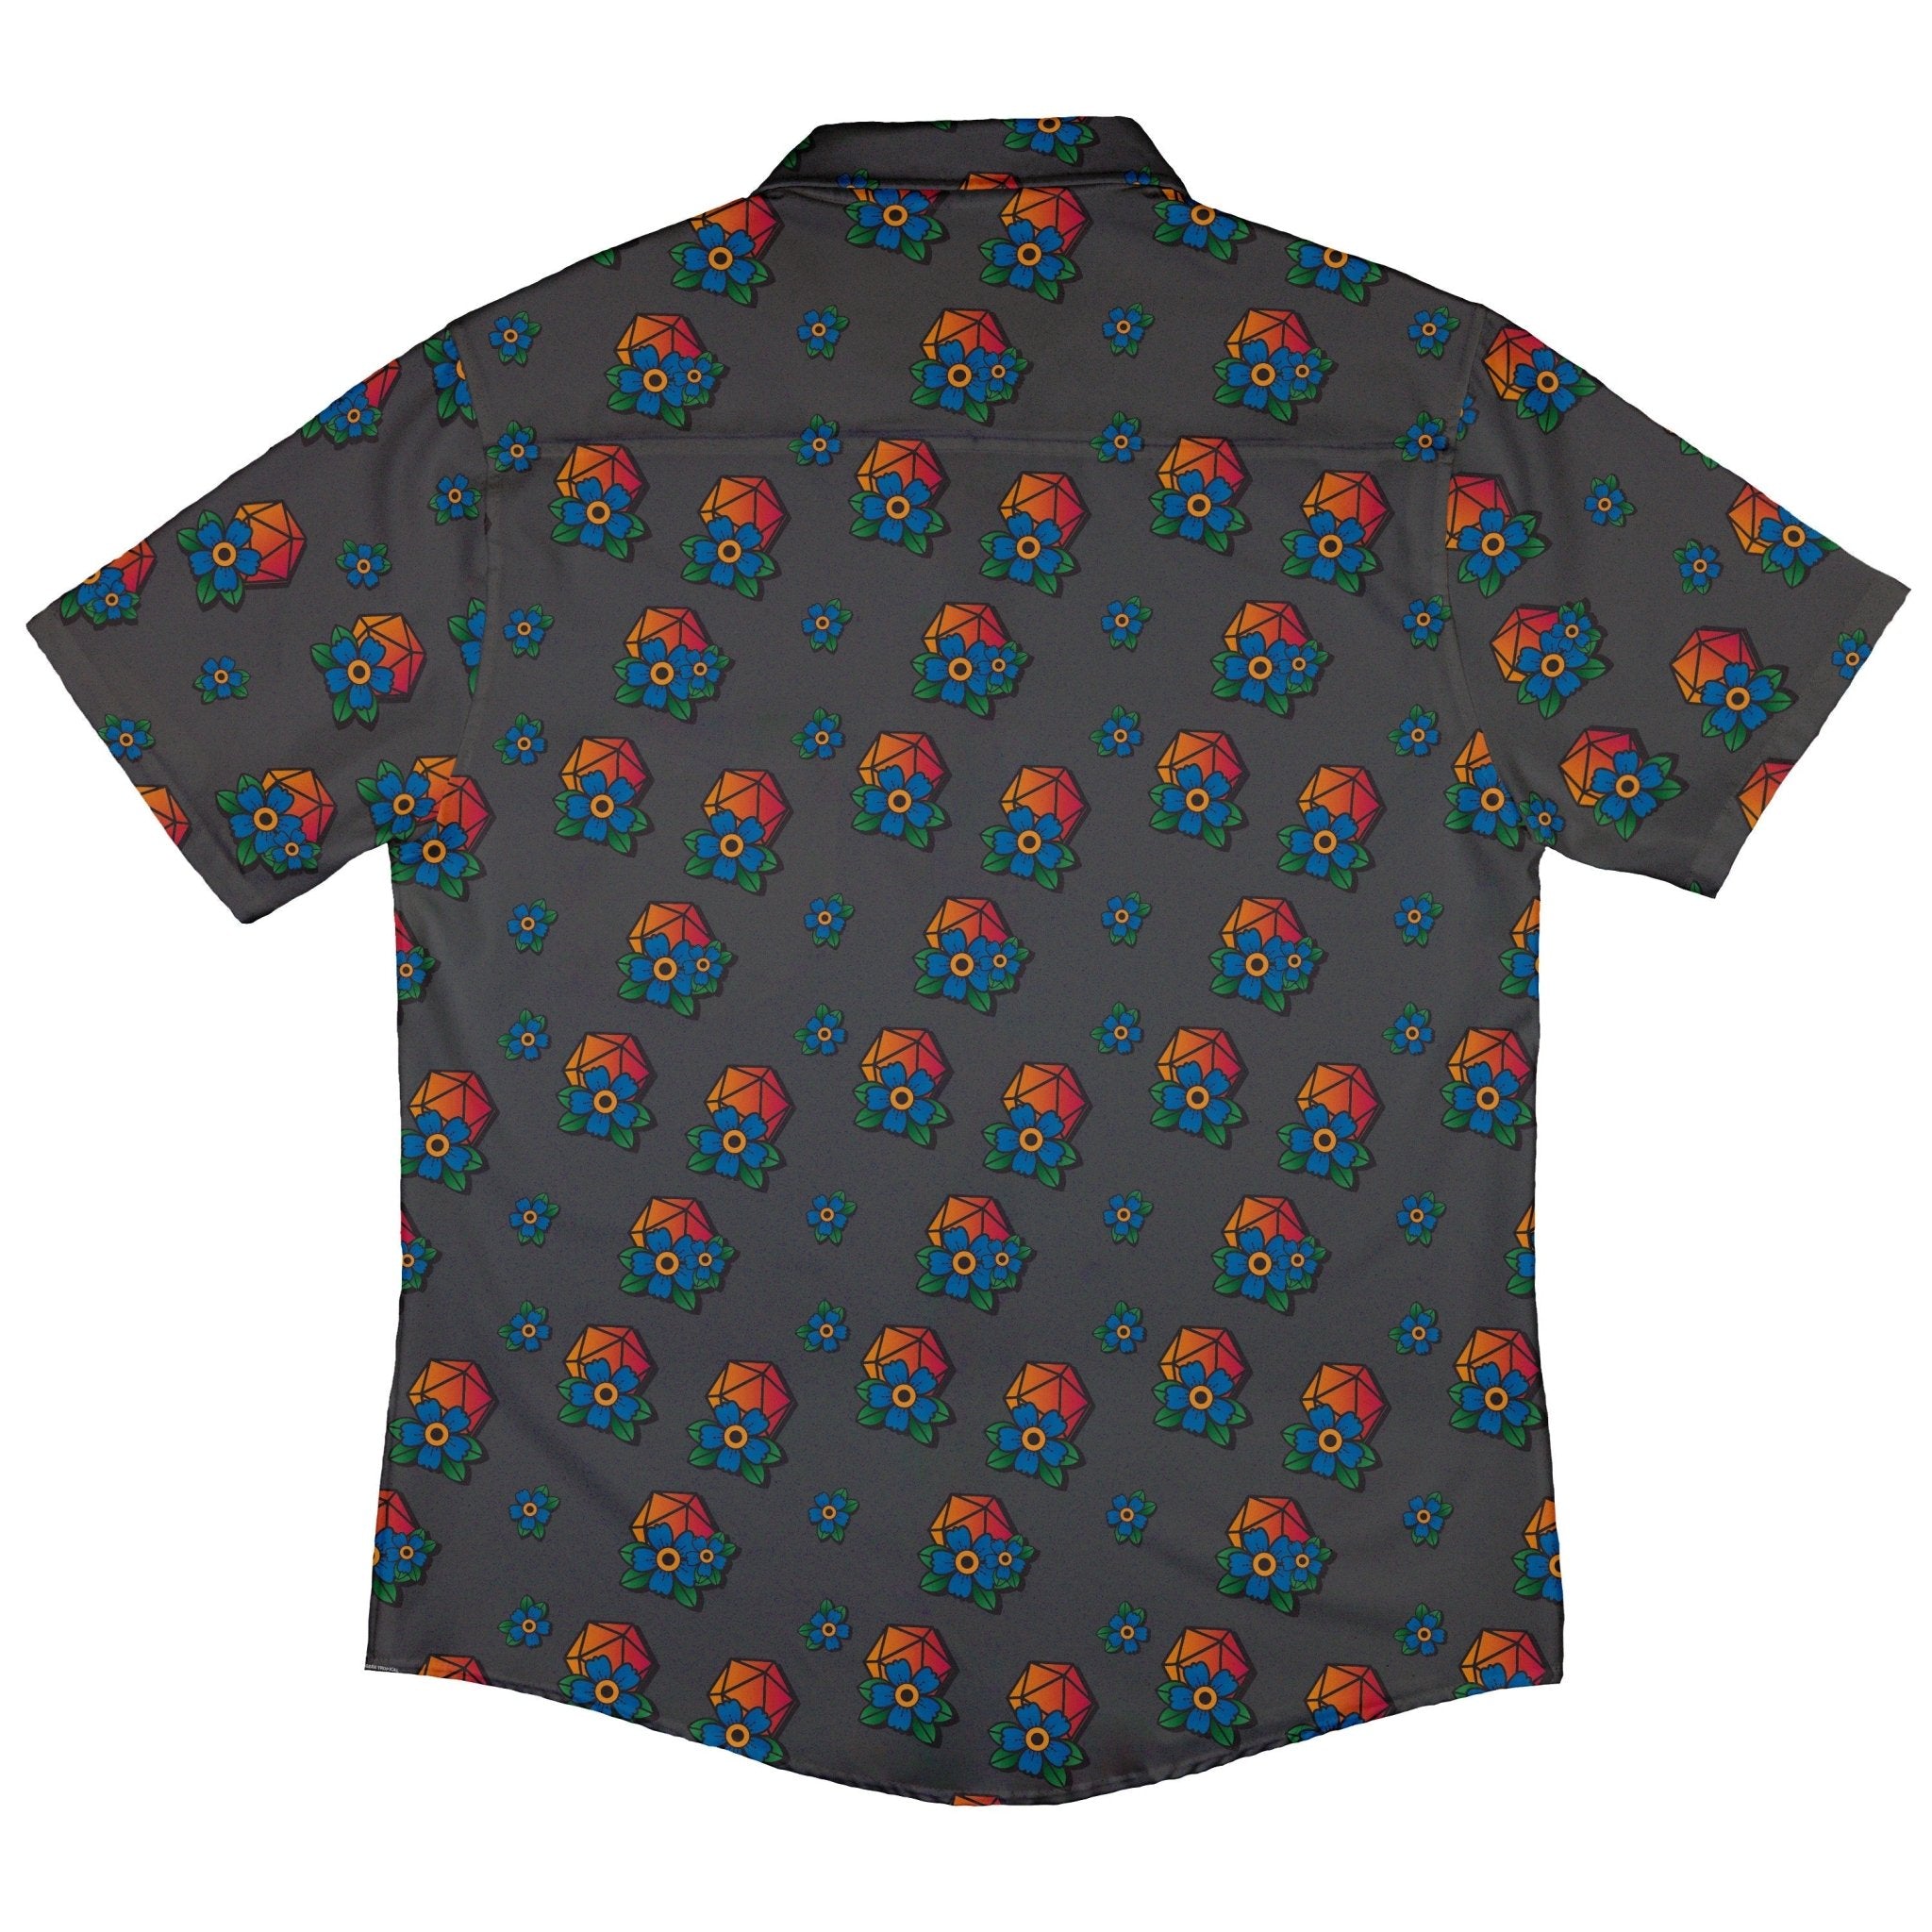 D20 Floral Hawaiian Gray Button Up Shirt - adult sizing - Design by Heather Davenport - dnd & rpg print